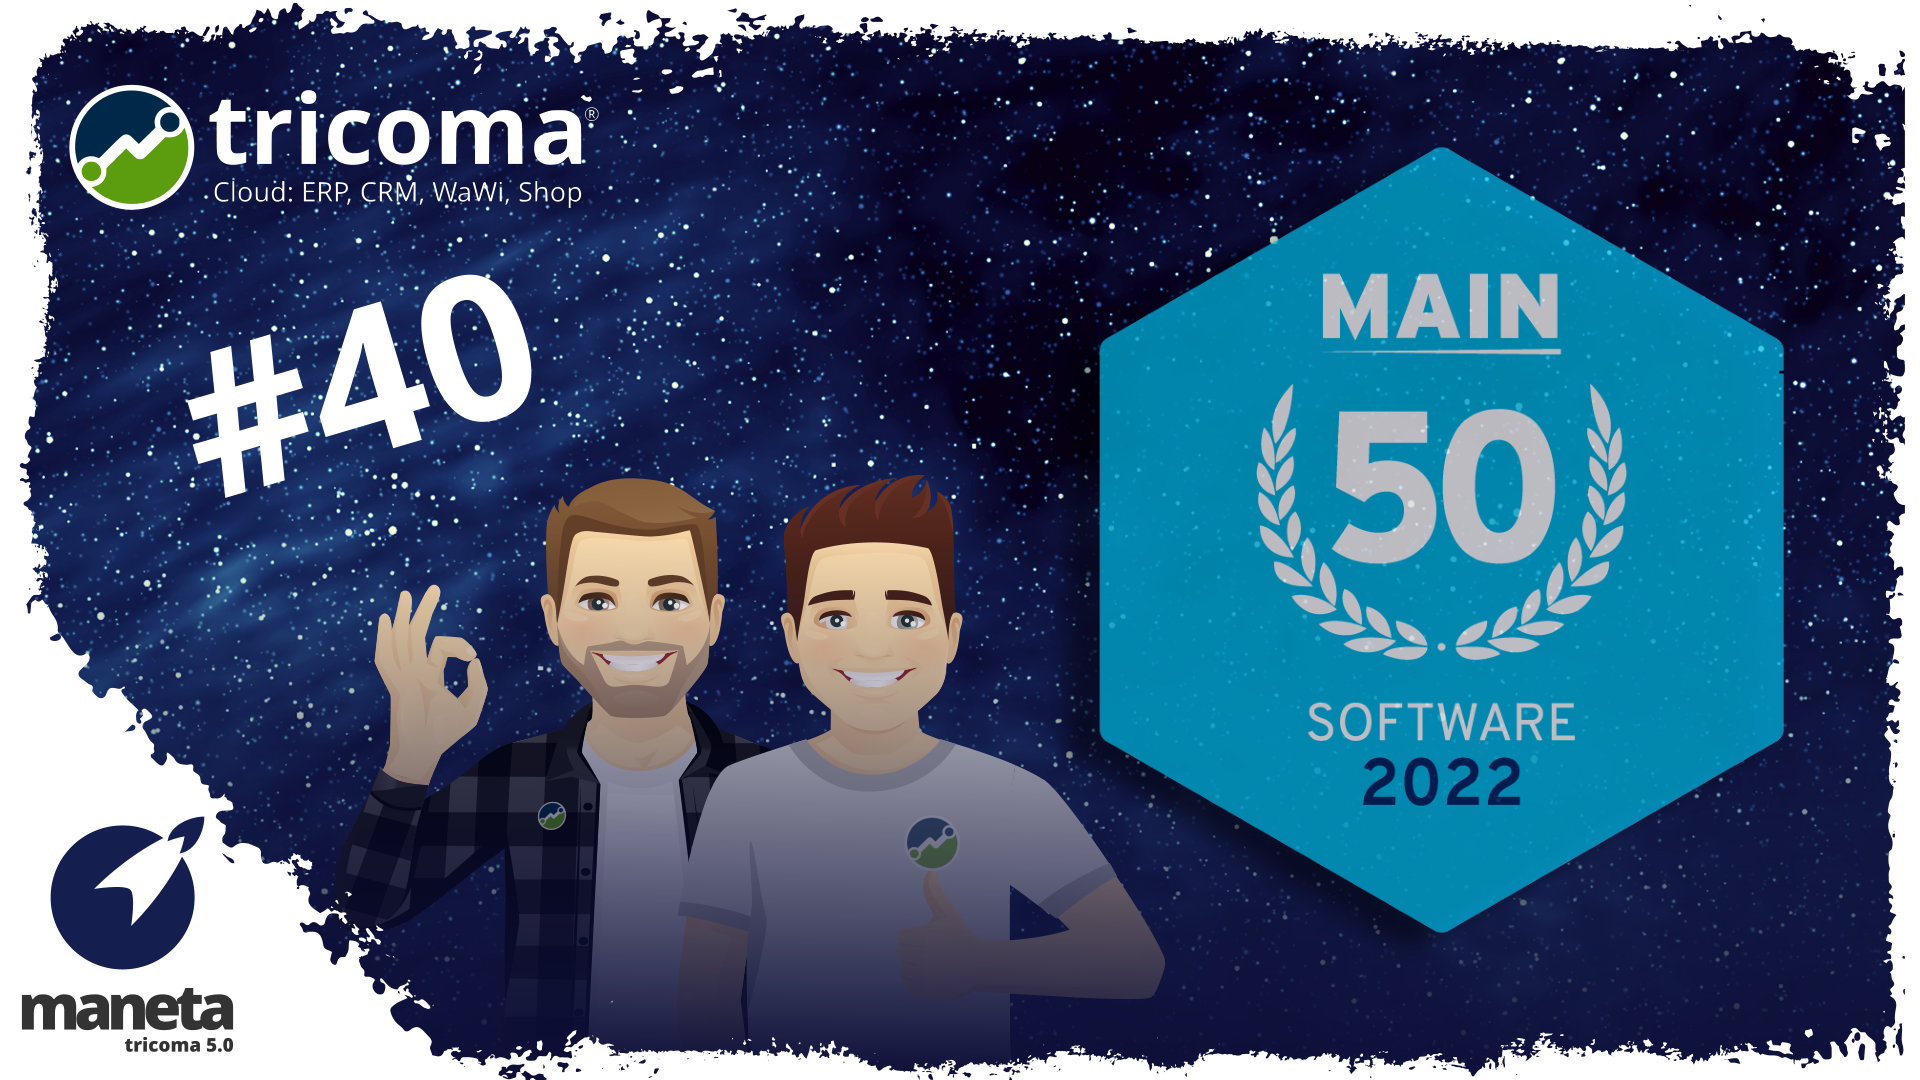 tricoma unter den Top 50 der Main Software 50 Awards Germany 2022